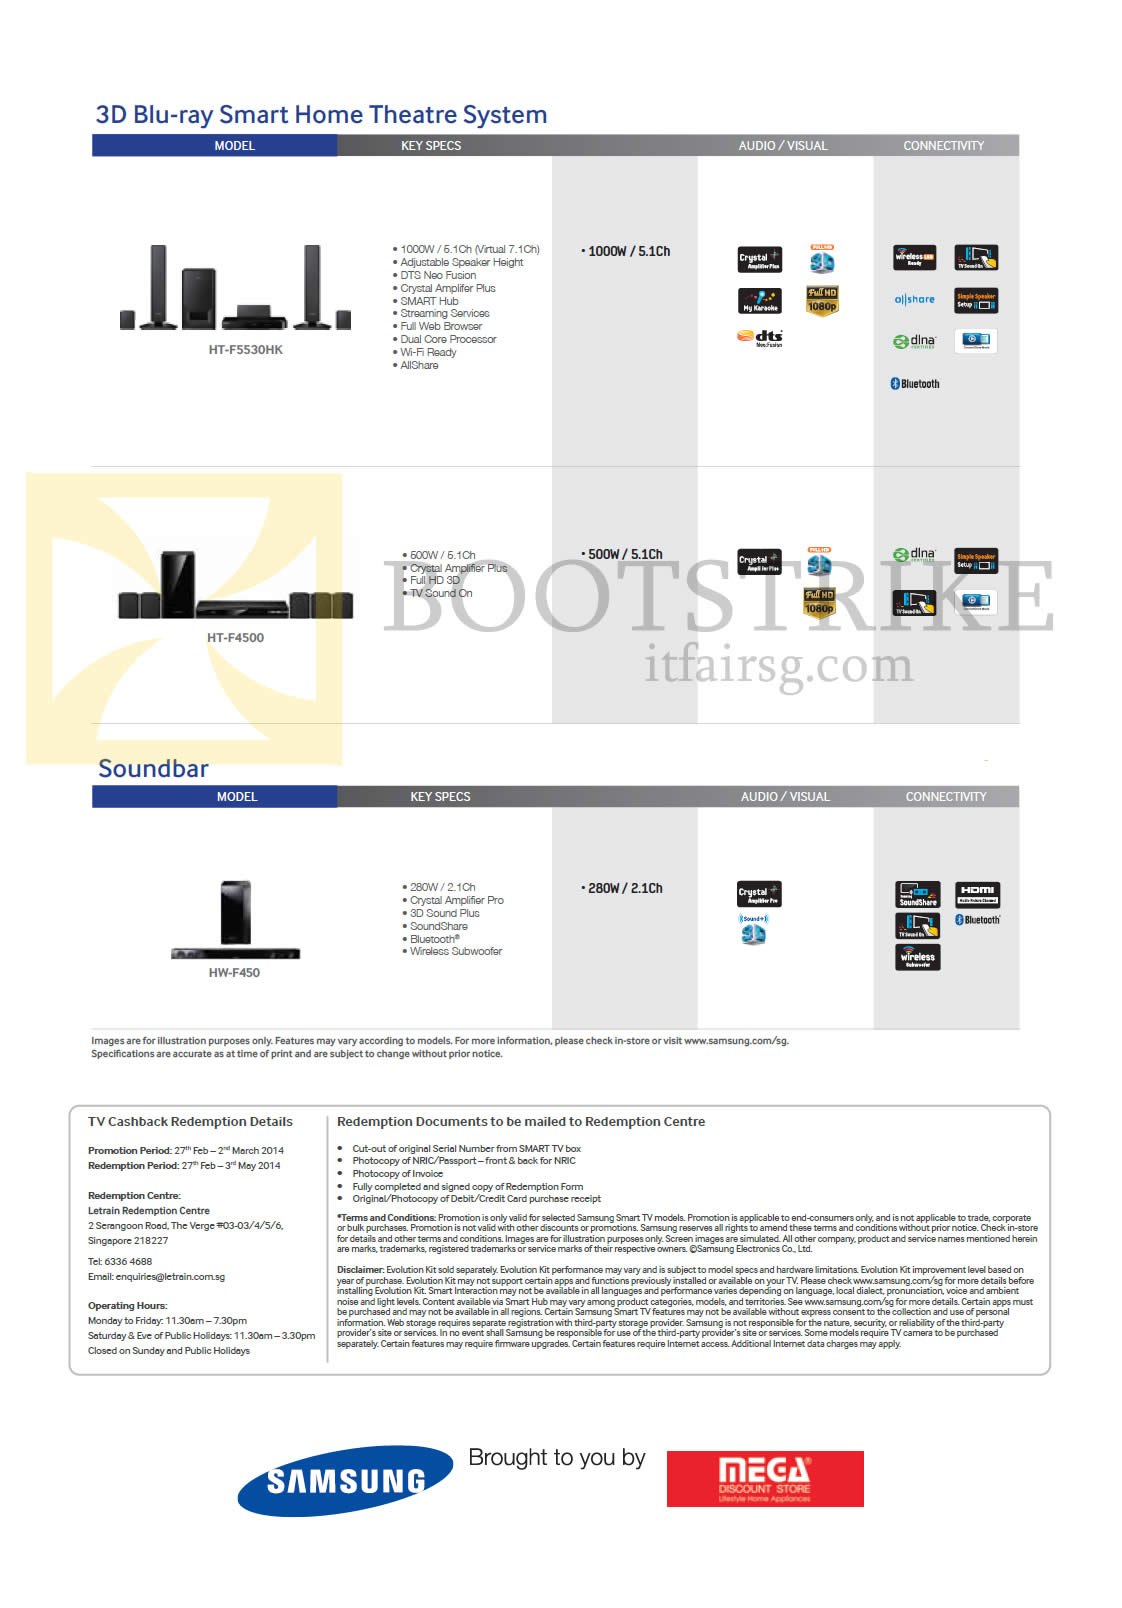 IT SHOW 2014 price list image brochure of Samsung Mega (No Prices) Home Theatre Systems, Soundbar HT-F5530HK, F4500, HW-F450